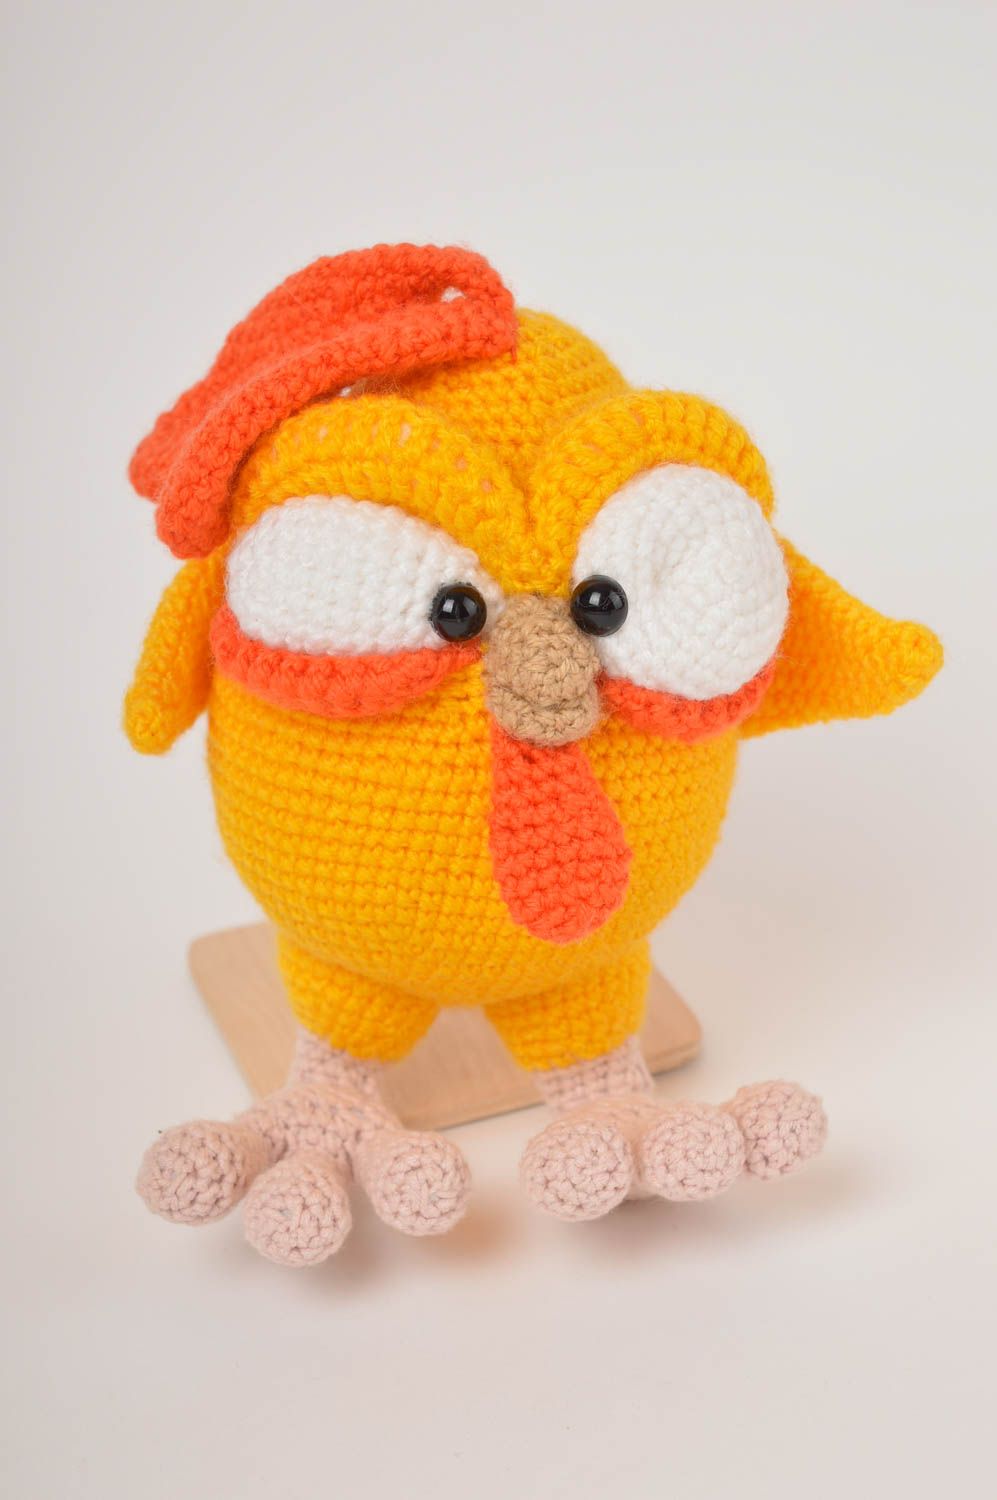 Muñeco de peluche hecho a mano juguete tejido a crochet regalo original foto 2